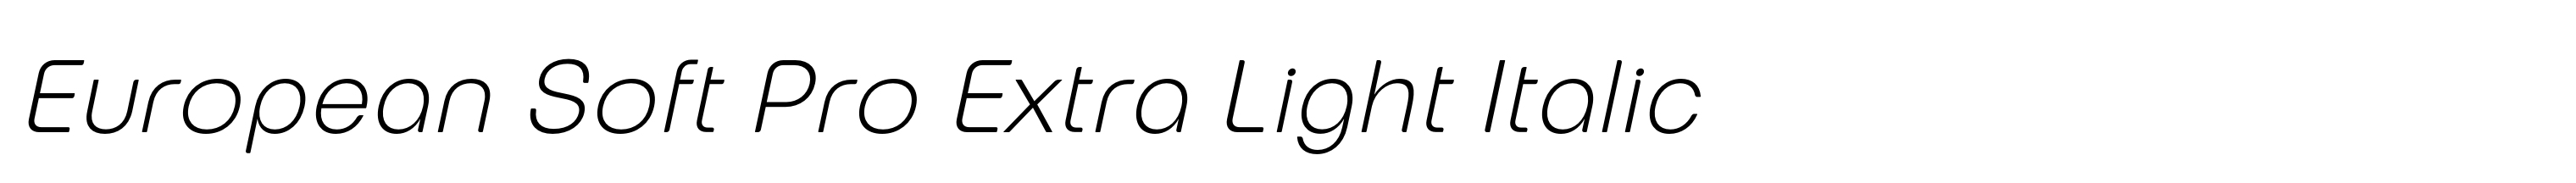 European Soft Pro Extra Light Italic